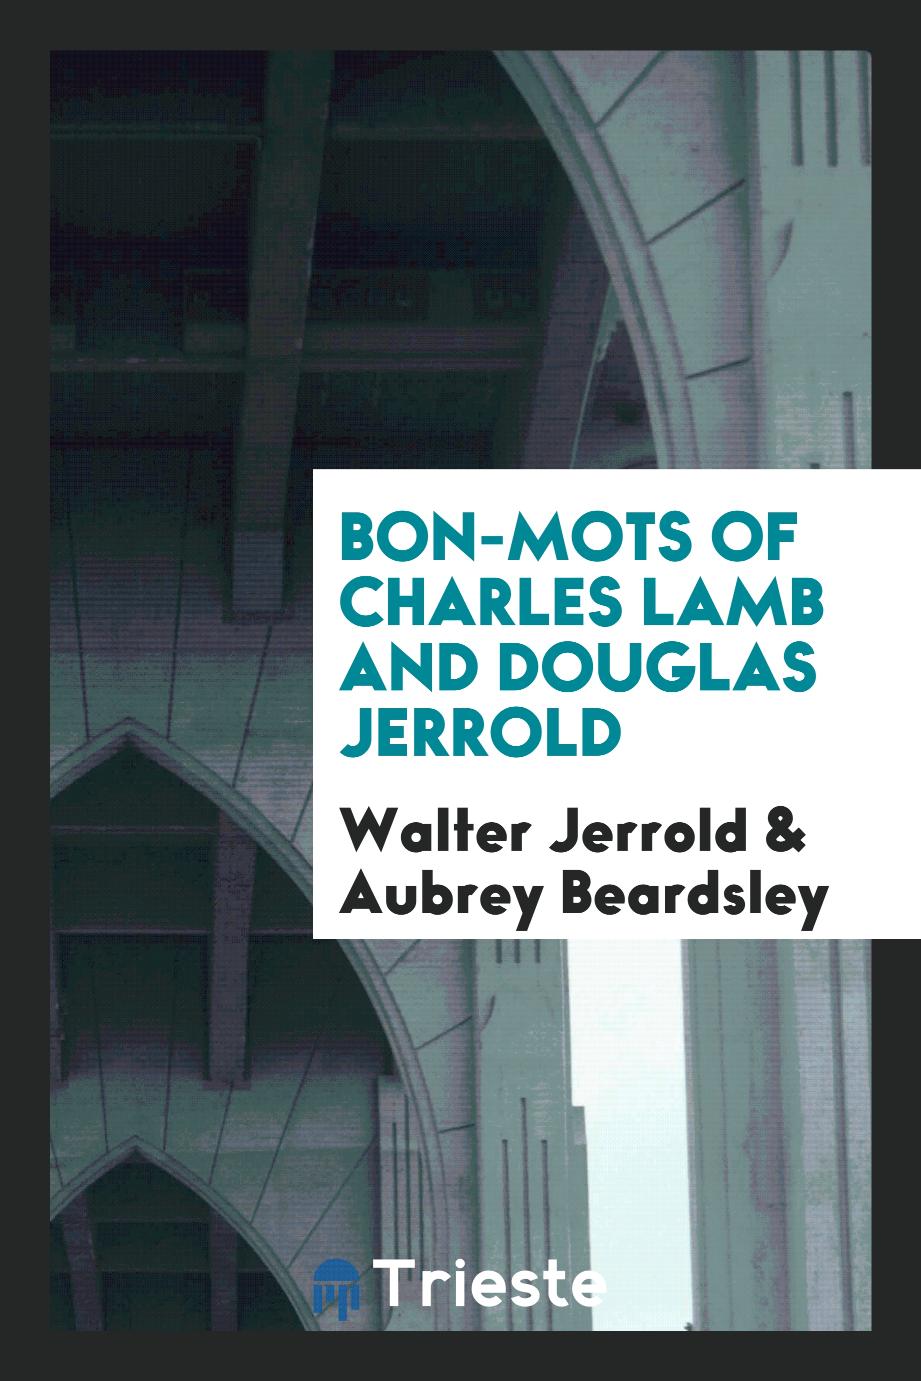 Bon-mots of Charles Lamb and Douglas Jerrold